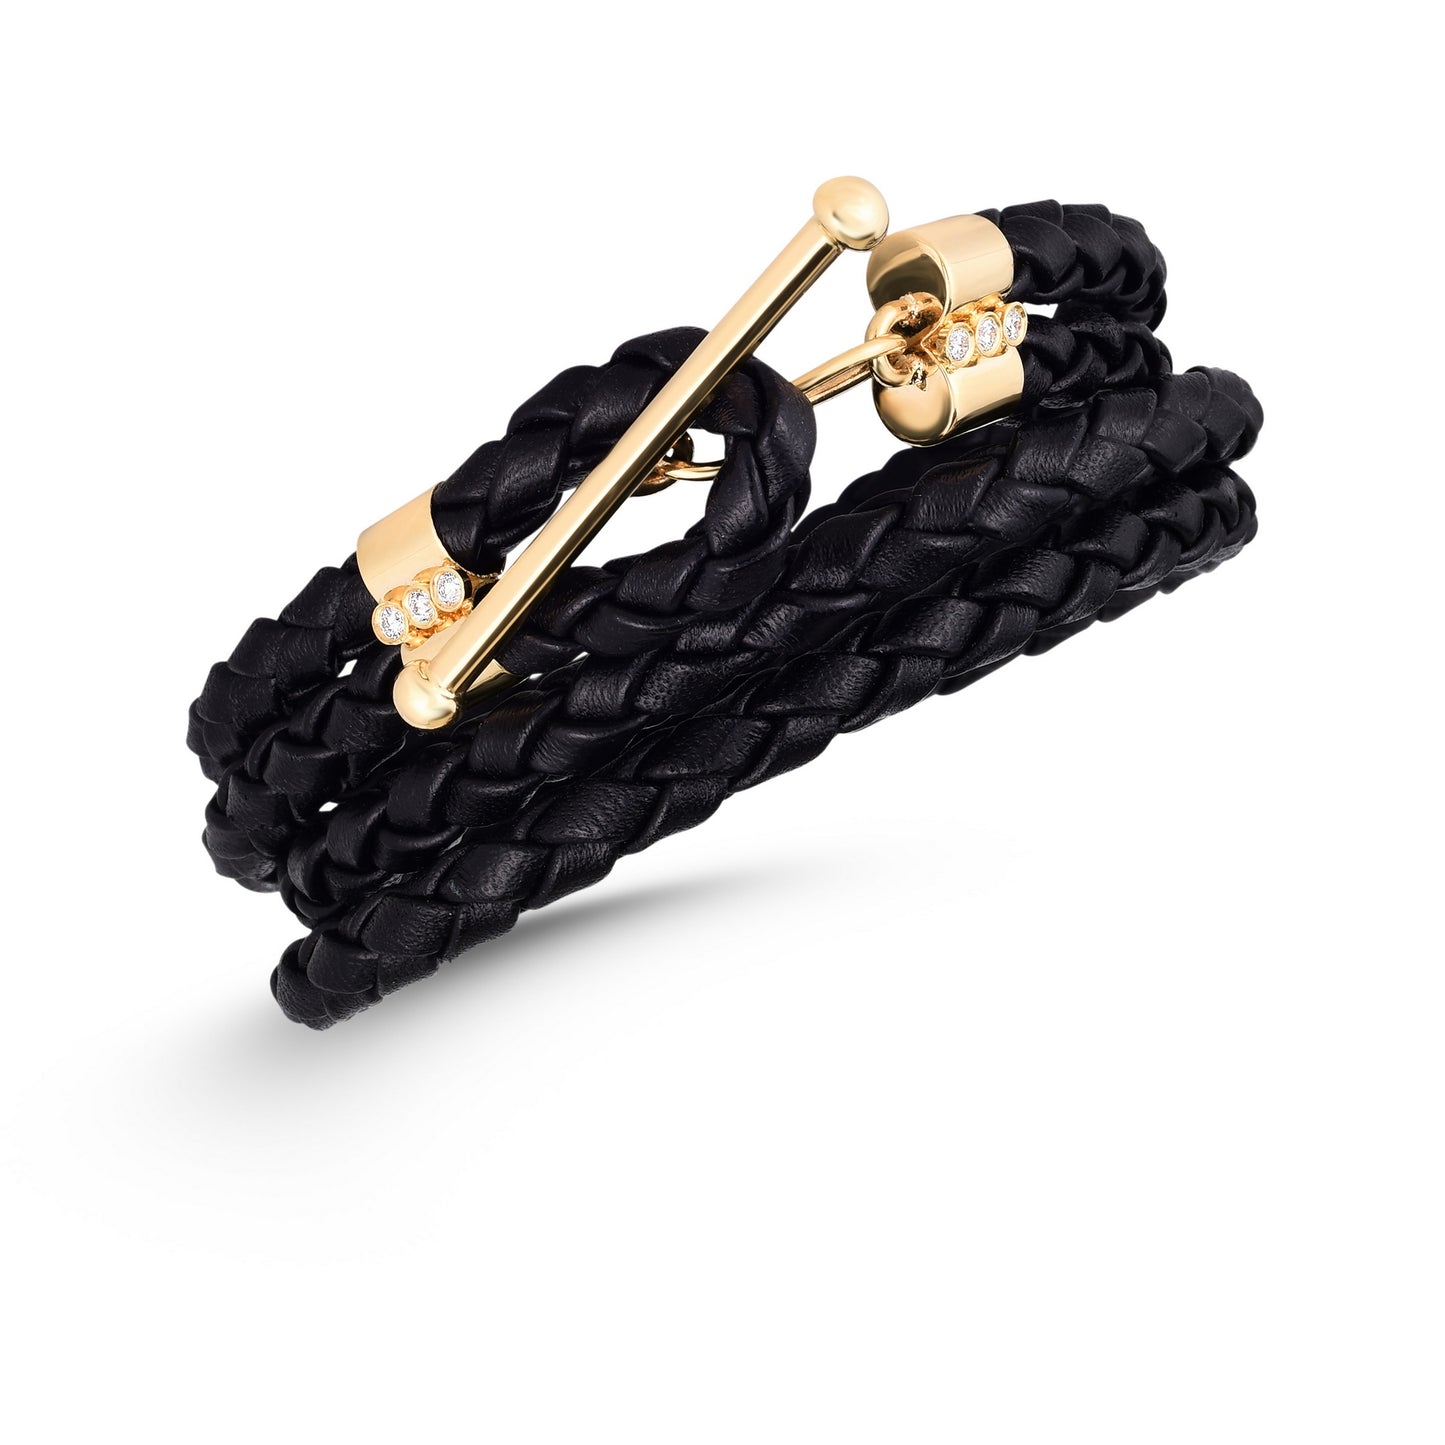 Black Rope Bracelet